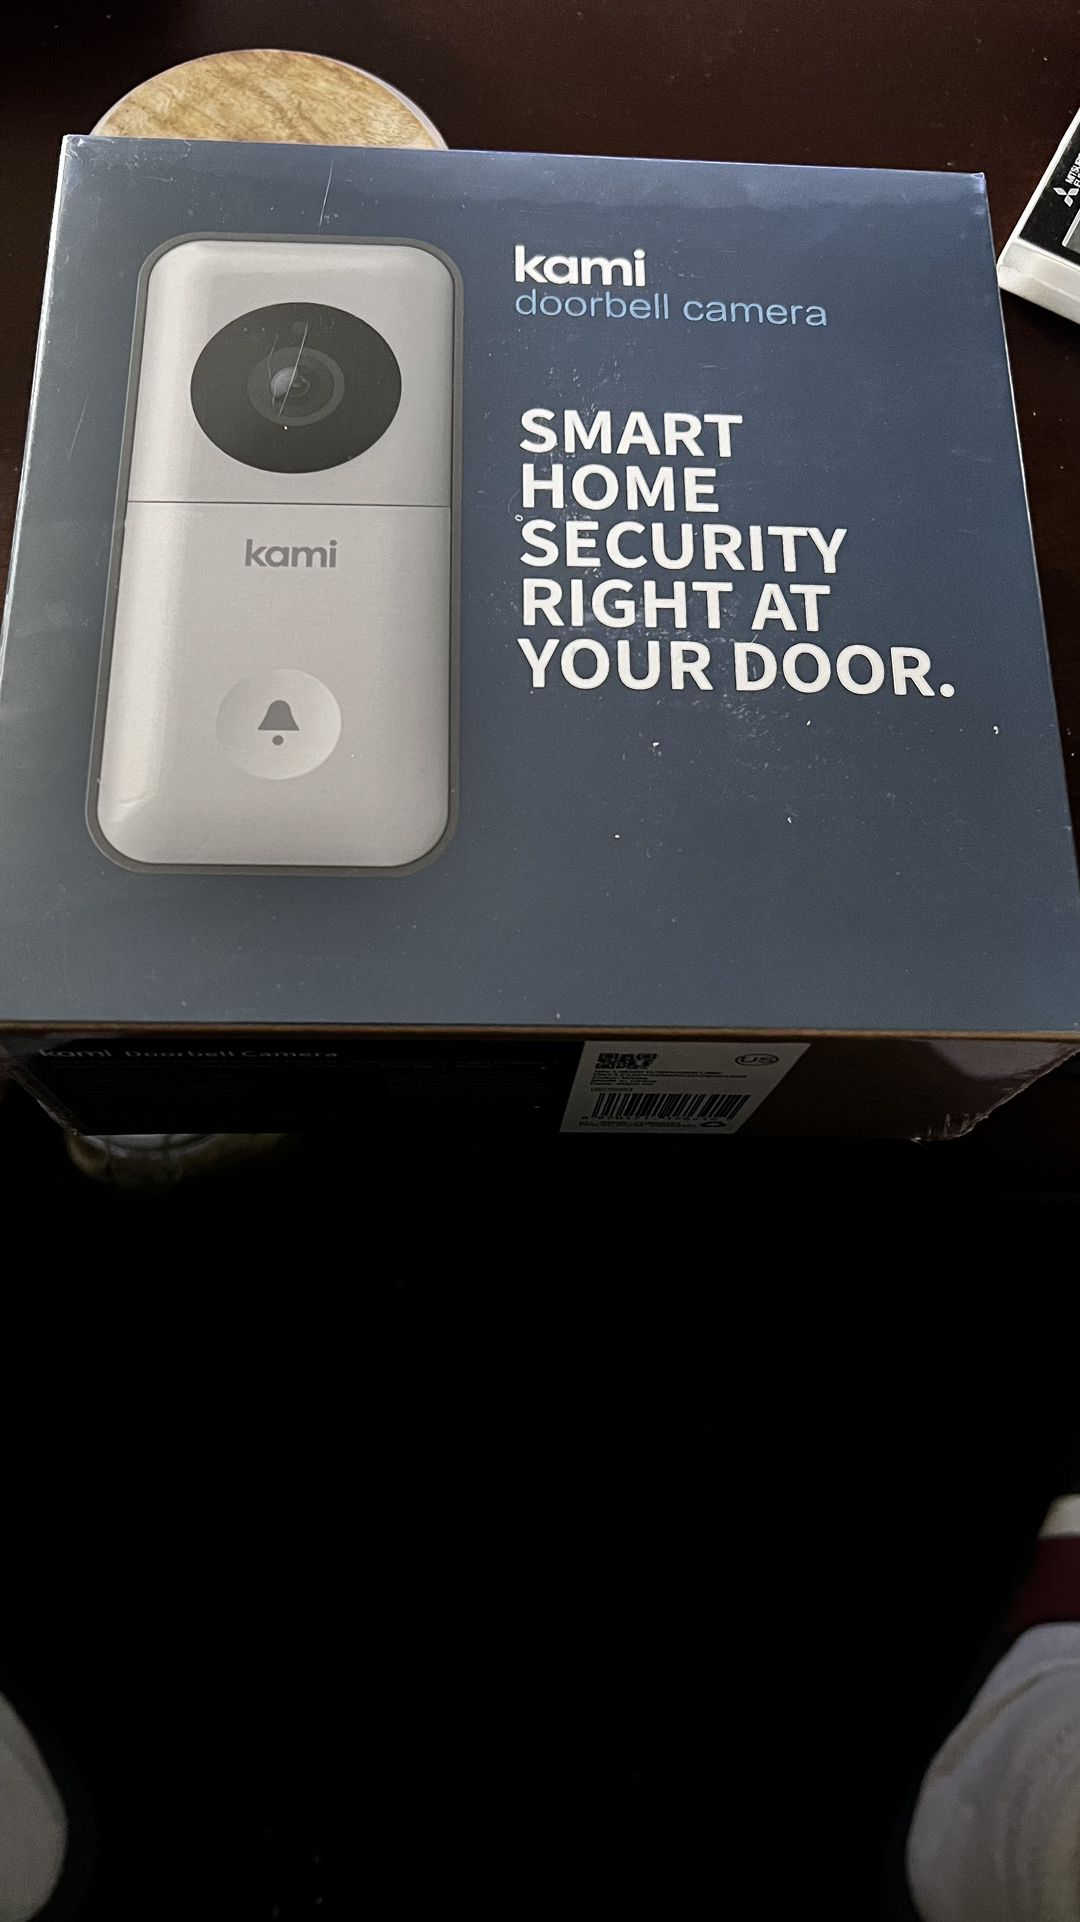 Kami doorbell camera with outdoor security camera